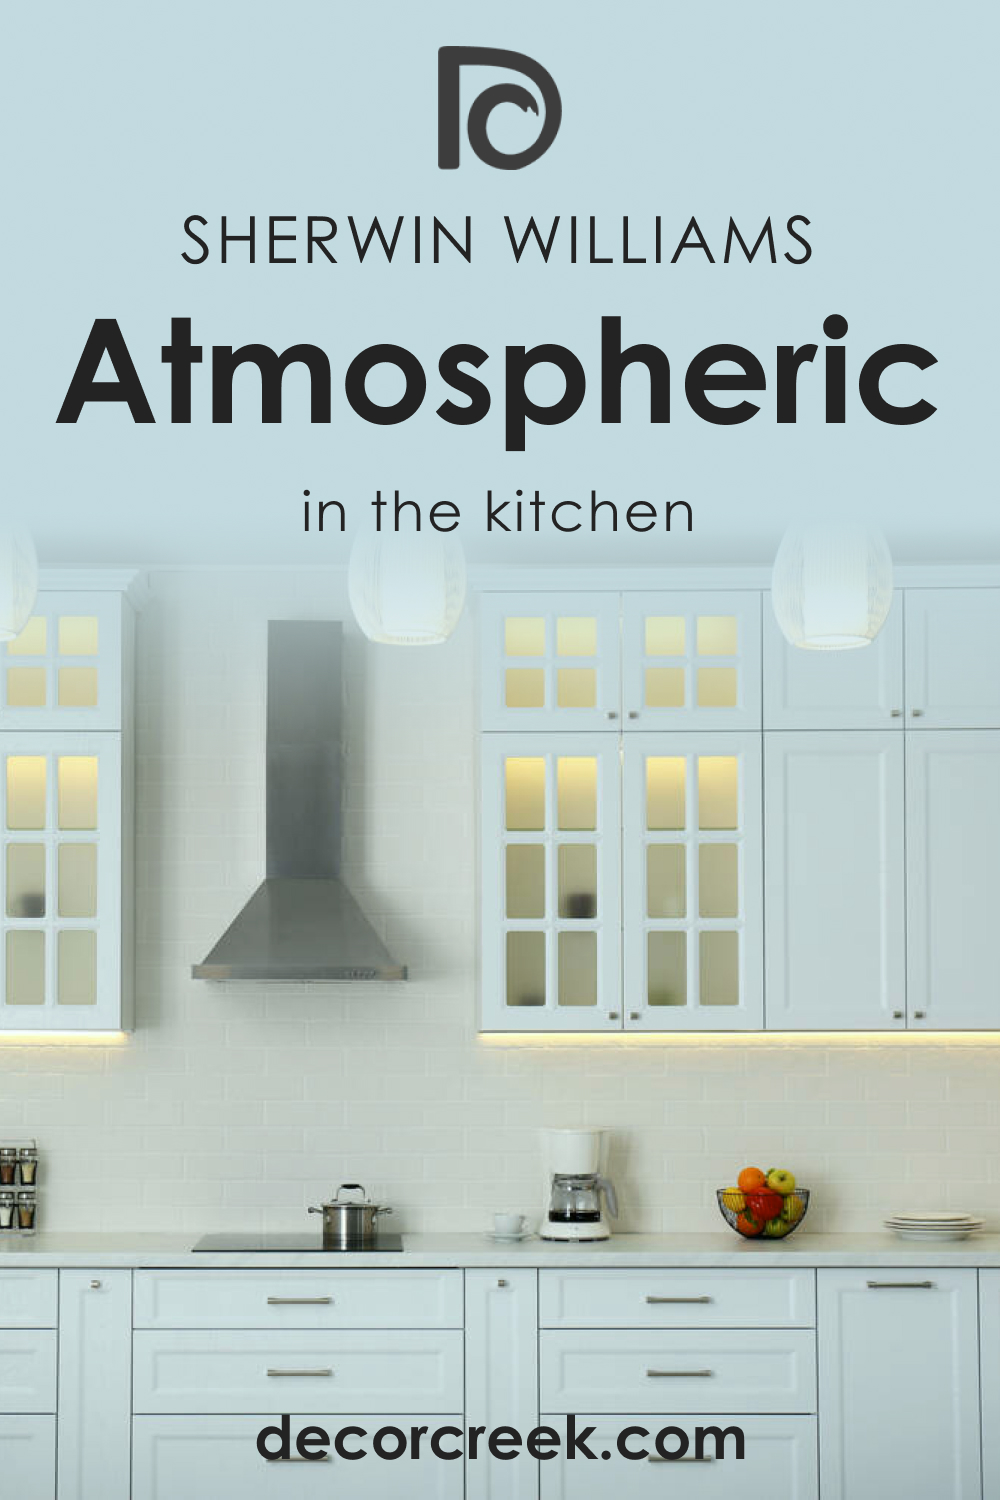 Atmospheric ob the Kitchen